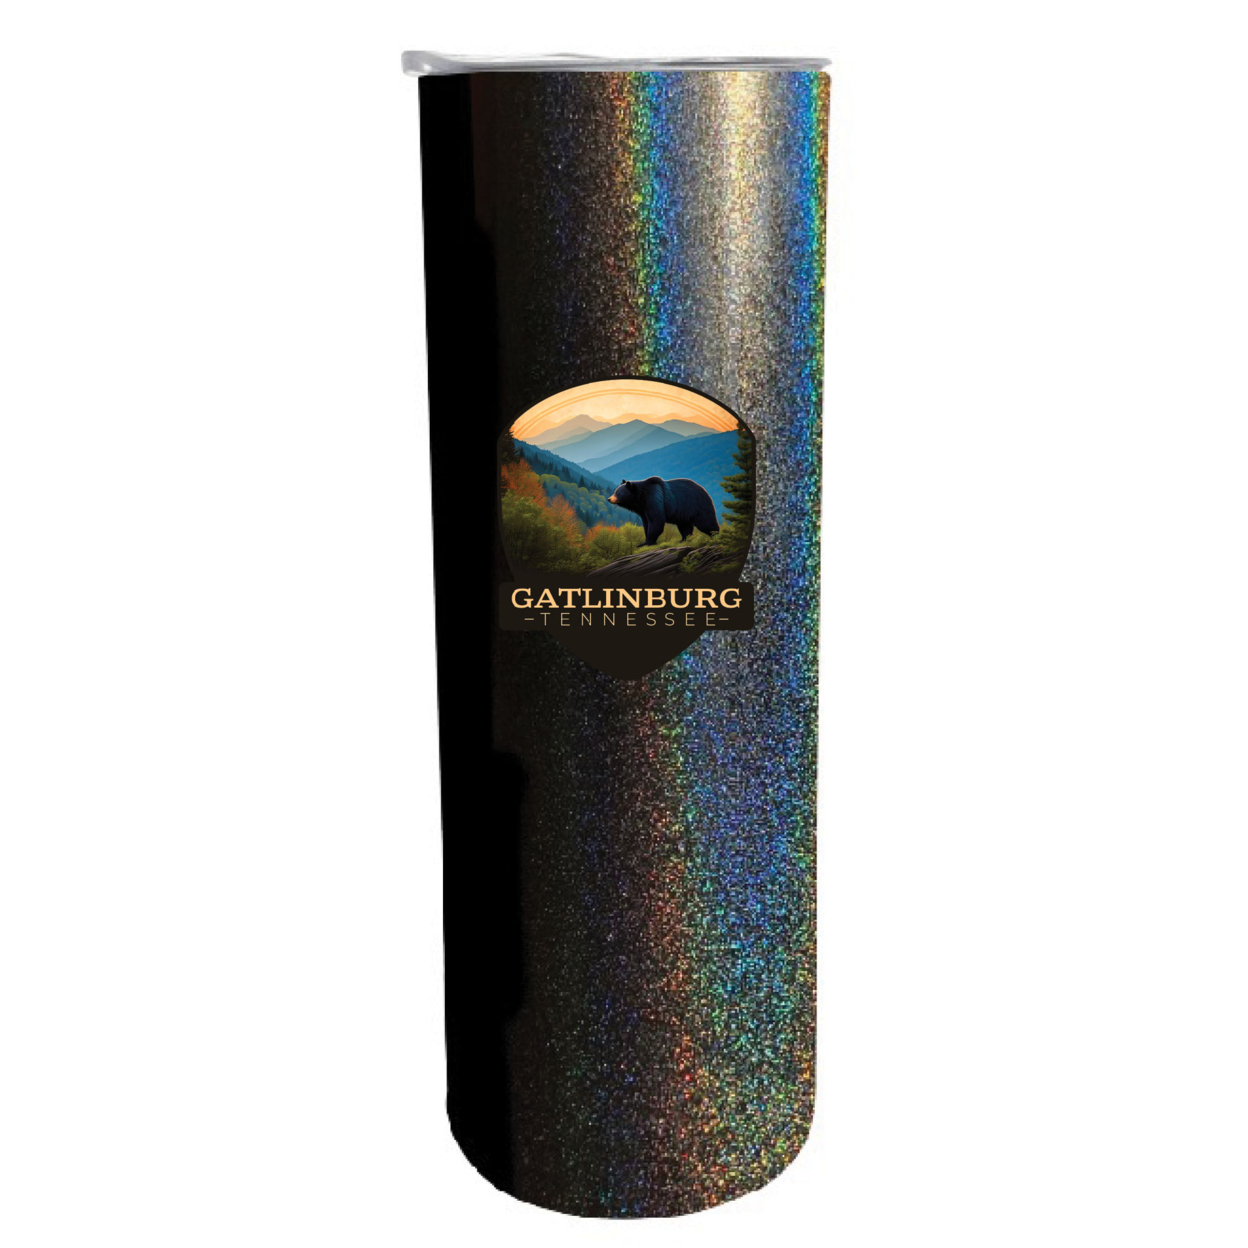 Gatlinburg Tennessee Souvenir 20 Oz Insulated Stainless Steel Skinny Tumbler - Rainbow Glitter Black, A